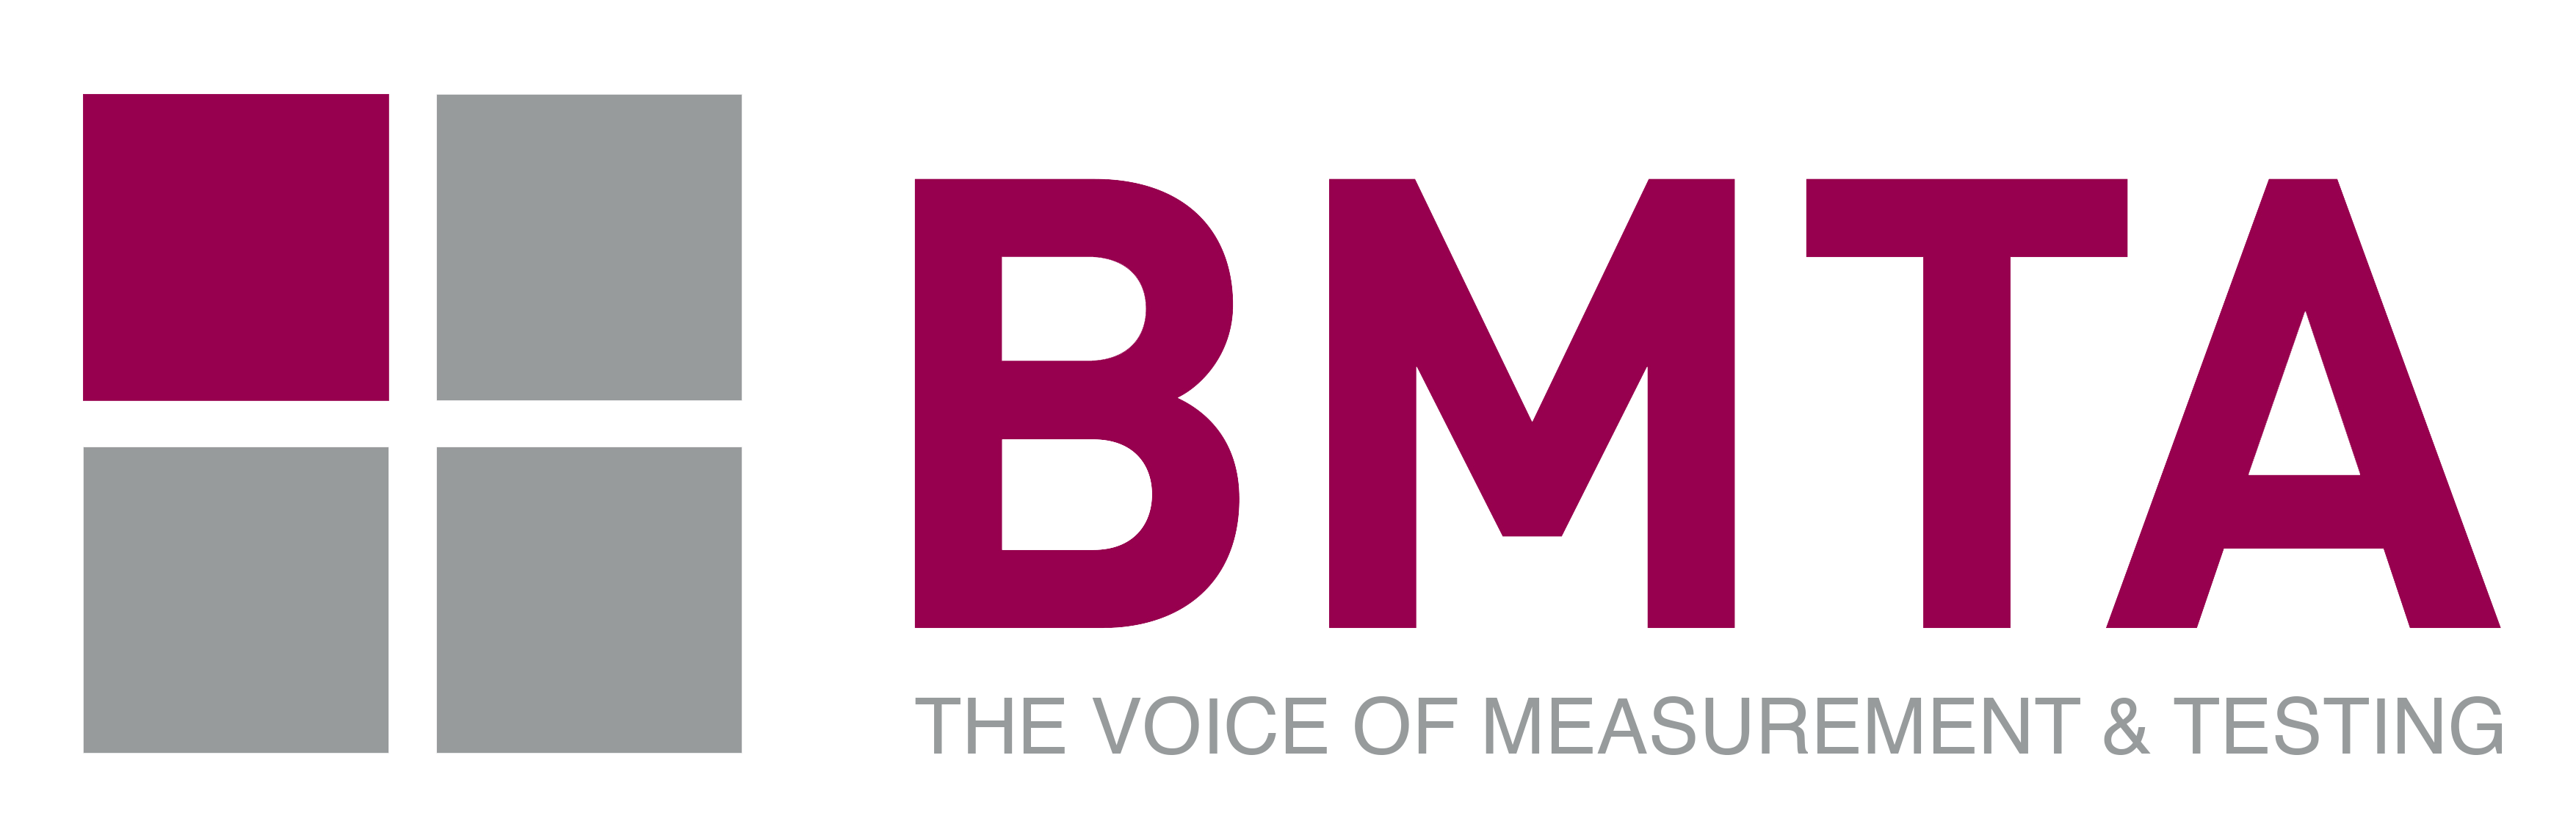 BRITISH MEASUREMENT & TESTING ASSOCIATION Logo